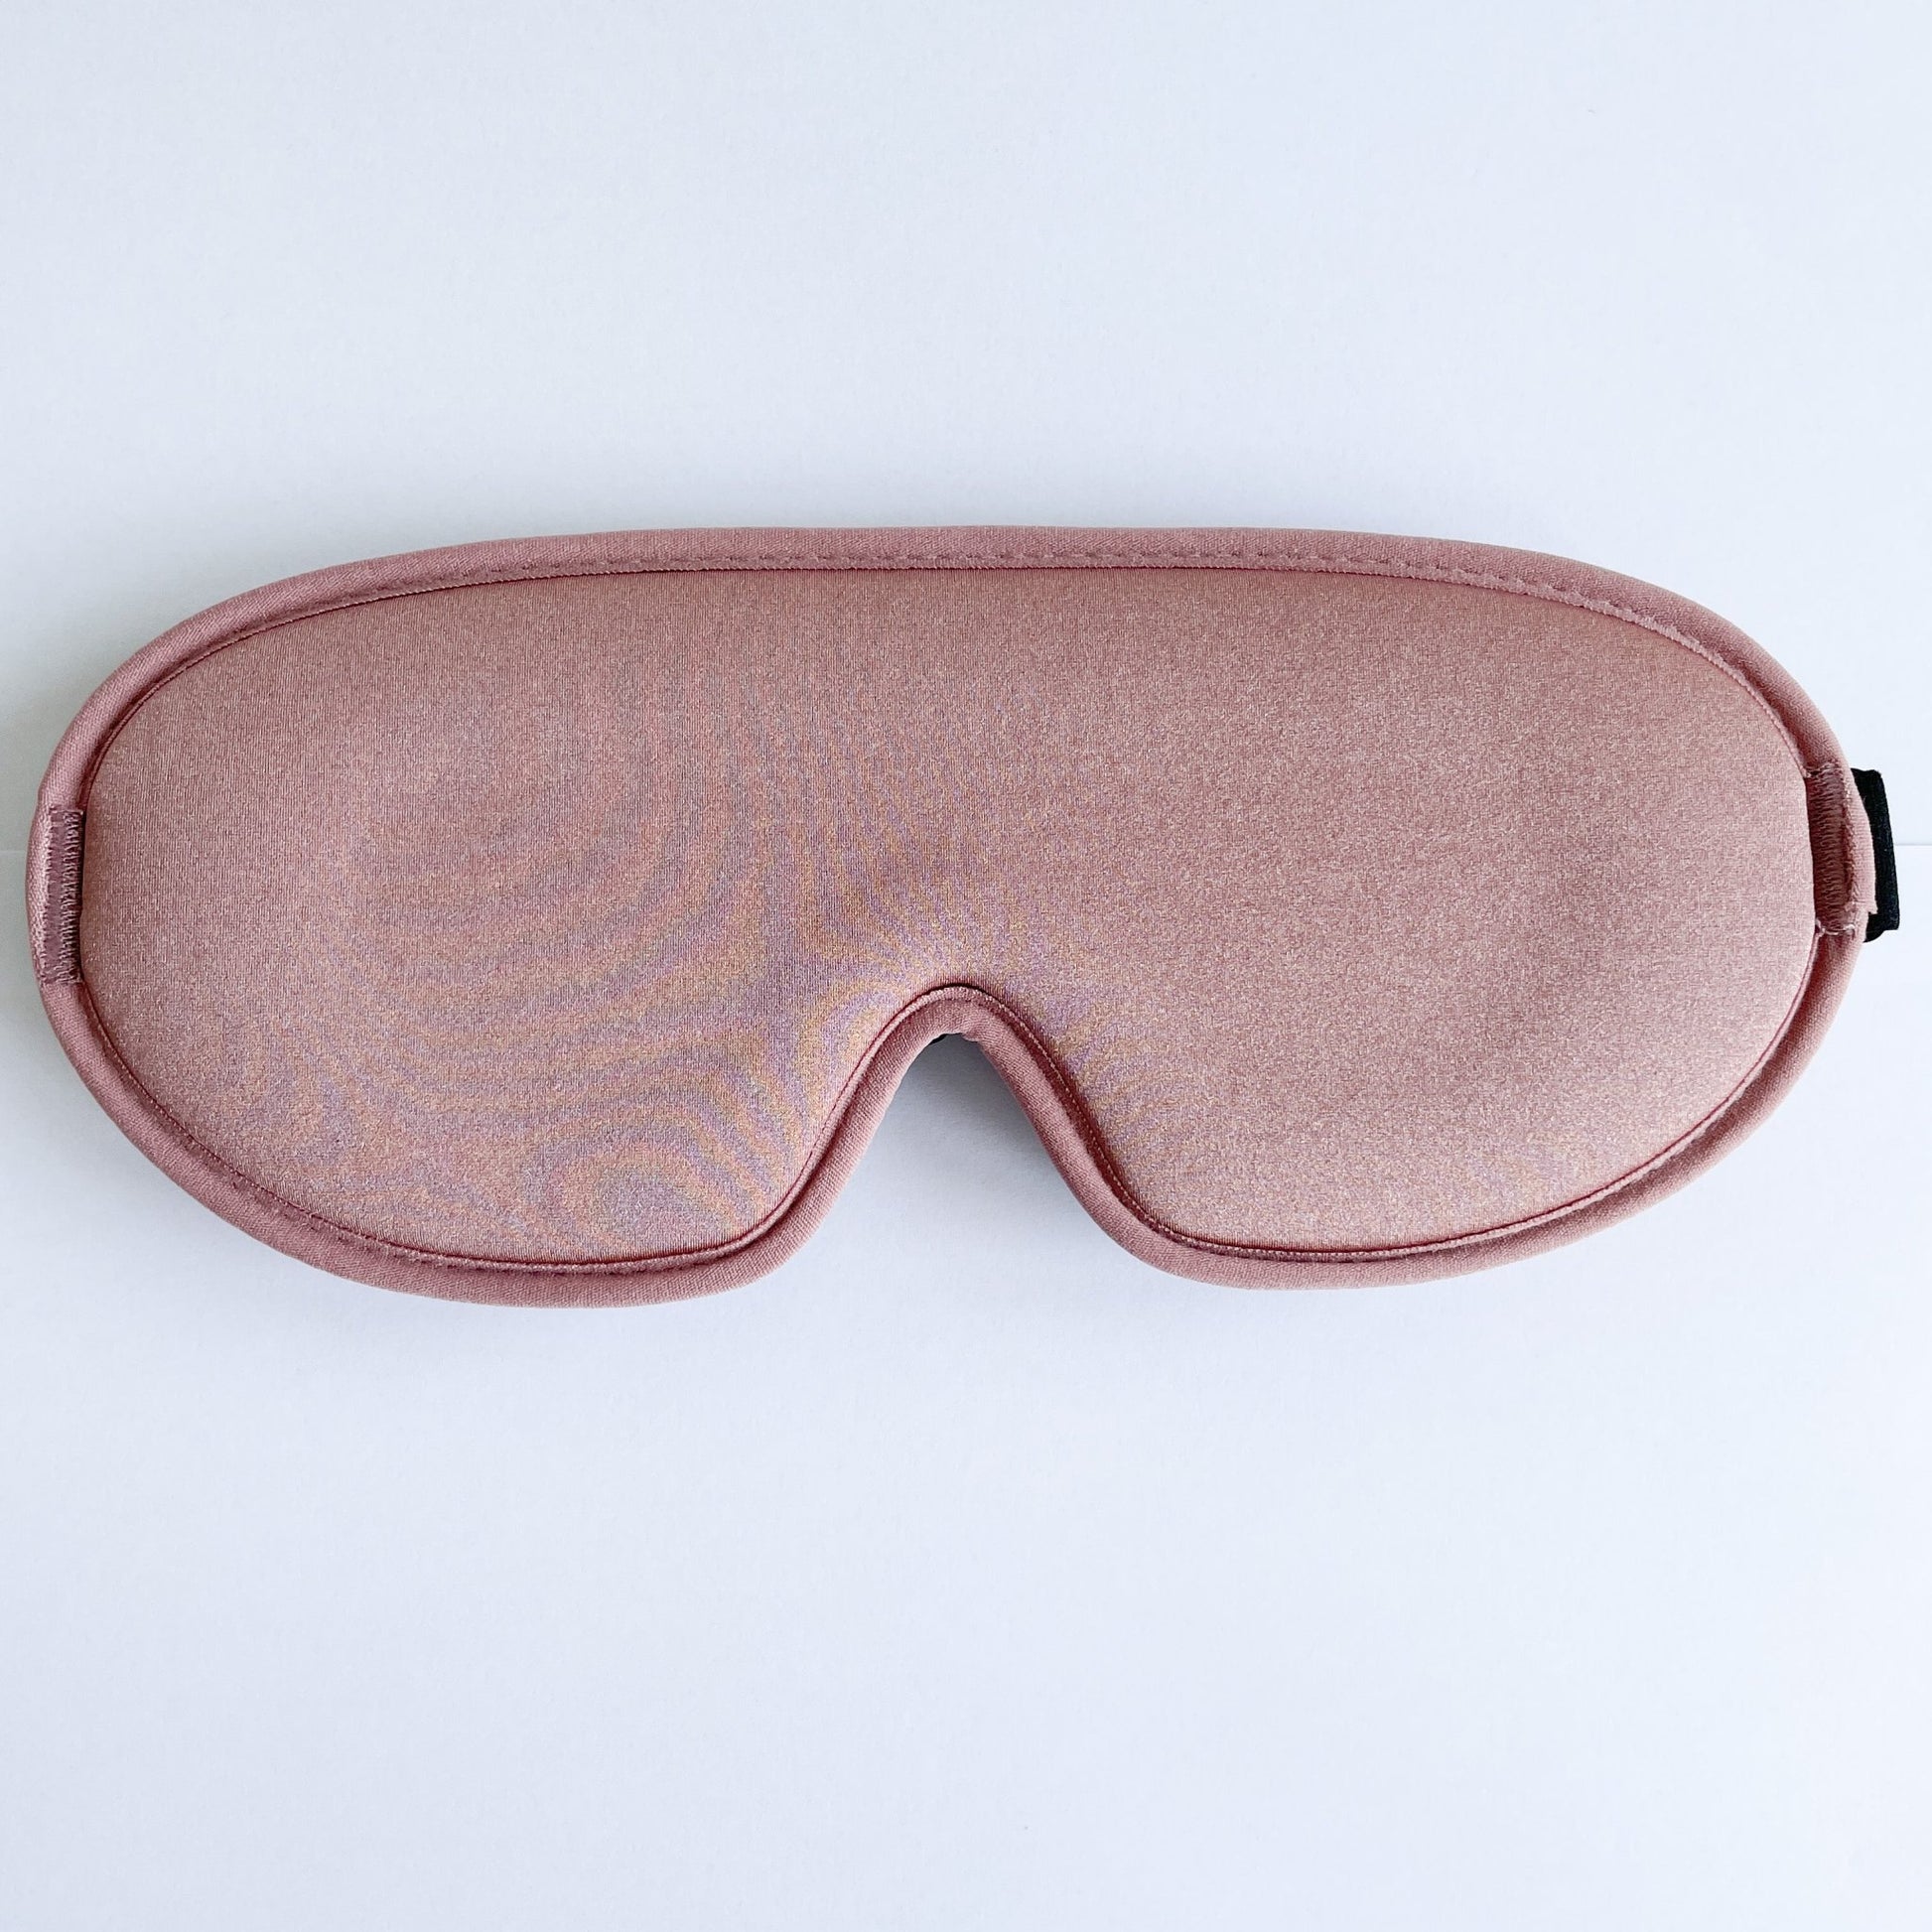 Schlafmaske "Henry" | Augenmaske zum Schlafen | schwarz oder roségold | Memory - Schaum - BERLIN EAR GUARD® OHRSTÖPSEL SHOP